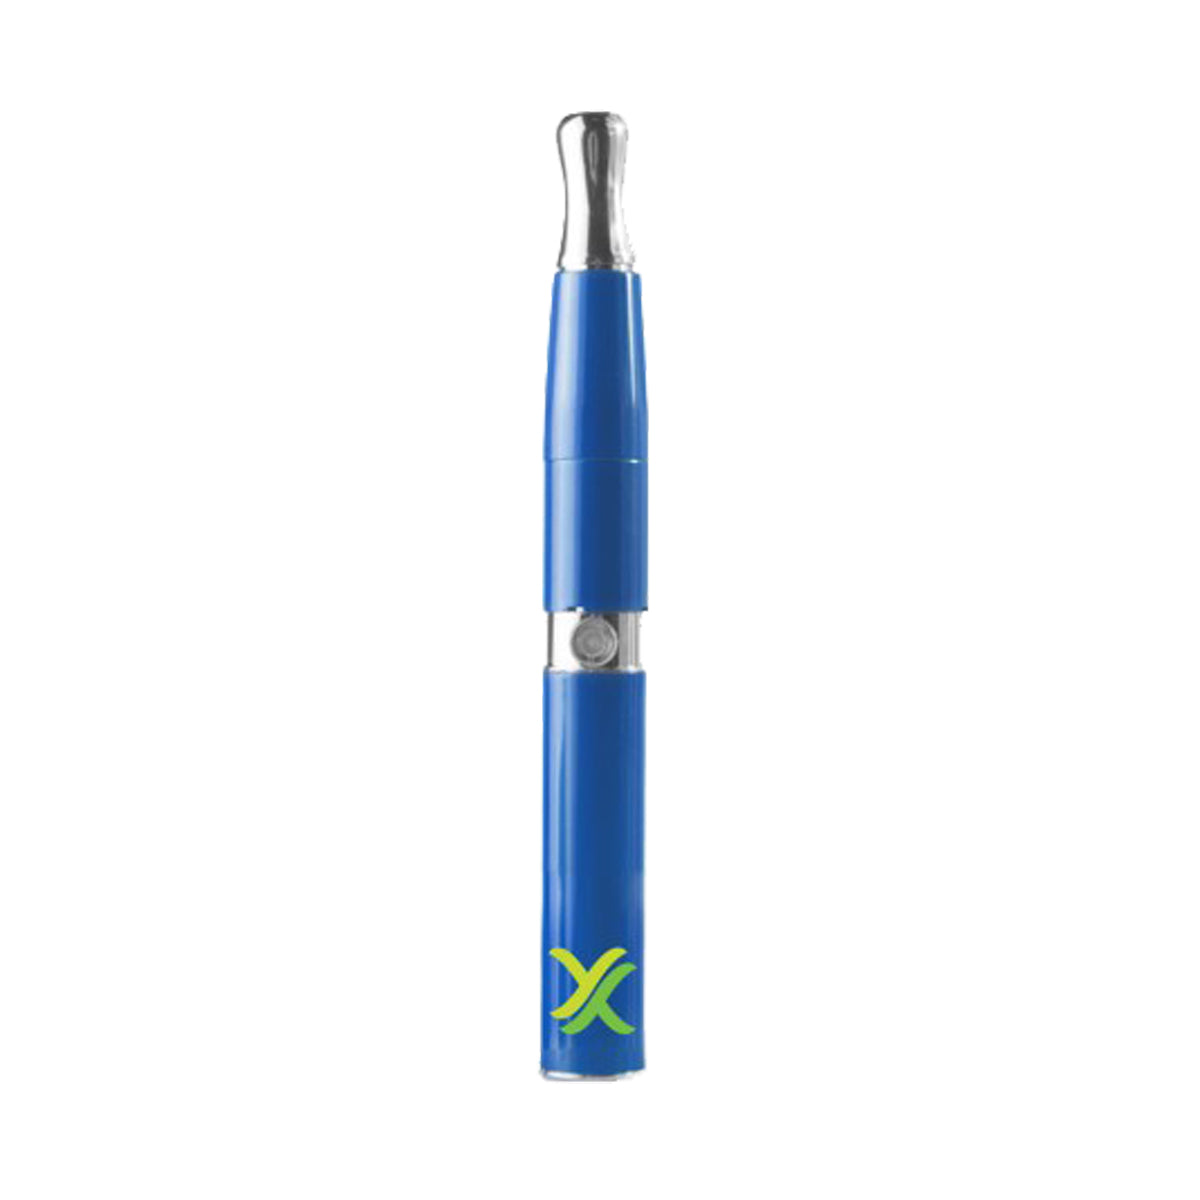 Exxus Vape Pen | Maxx Concentrate Kit Vaporizer | 650mAh - Blue